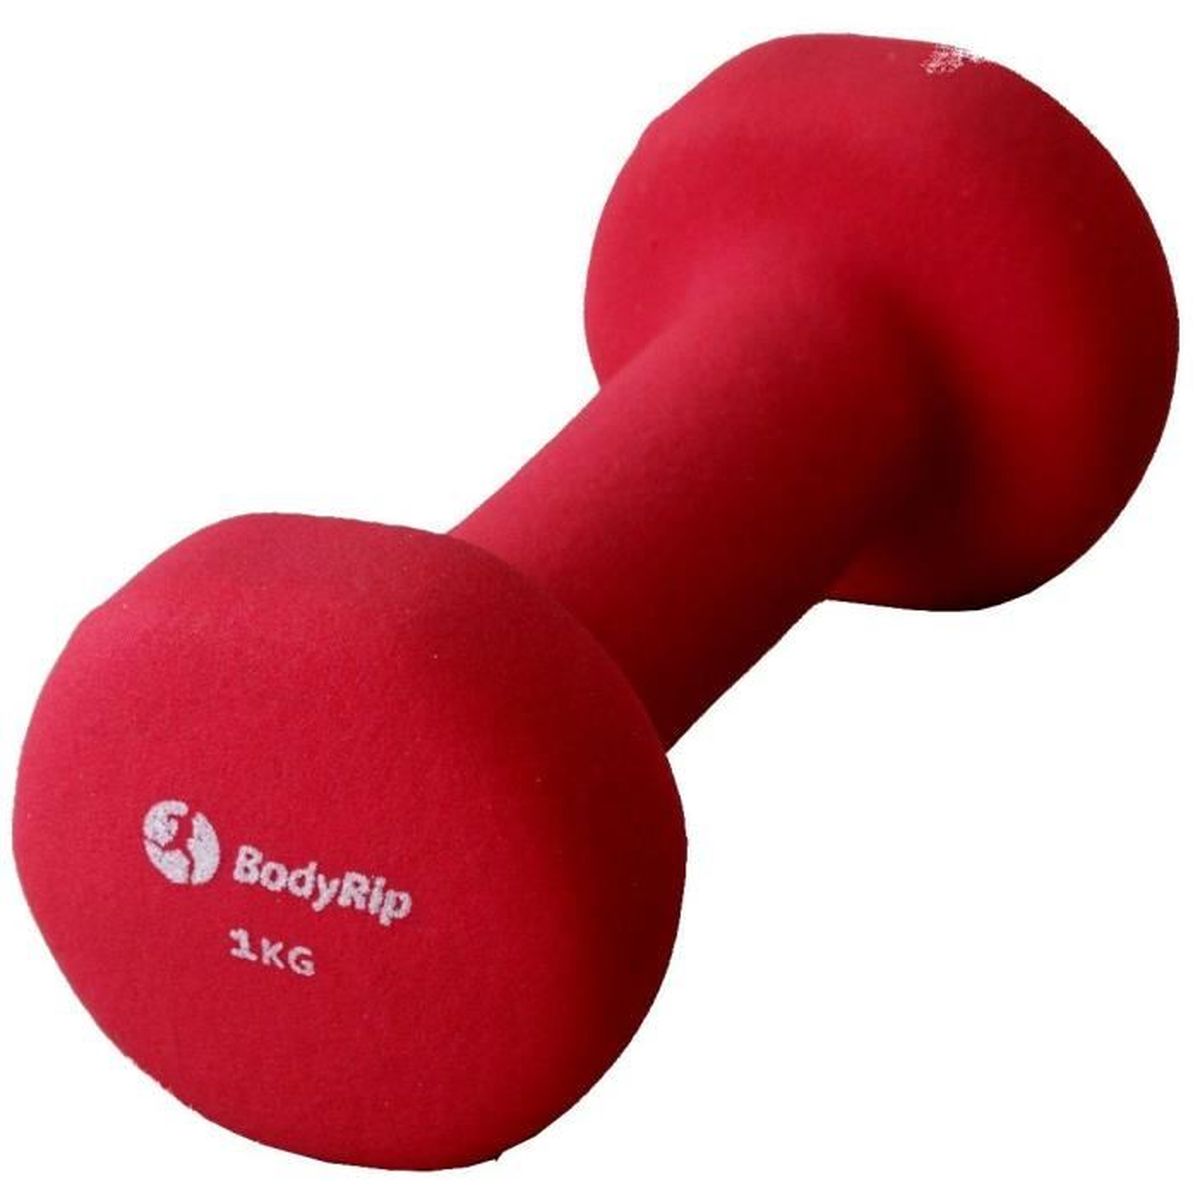 BODYRIP Fitness néoprène NEO Main Poids Haltères 1 x 1.5 Kg Exercice Home Gym